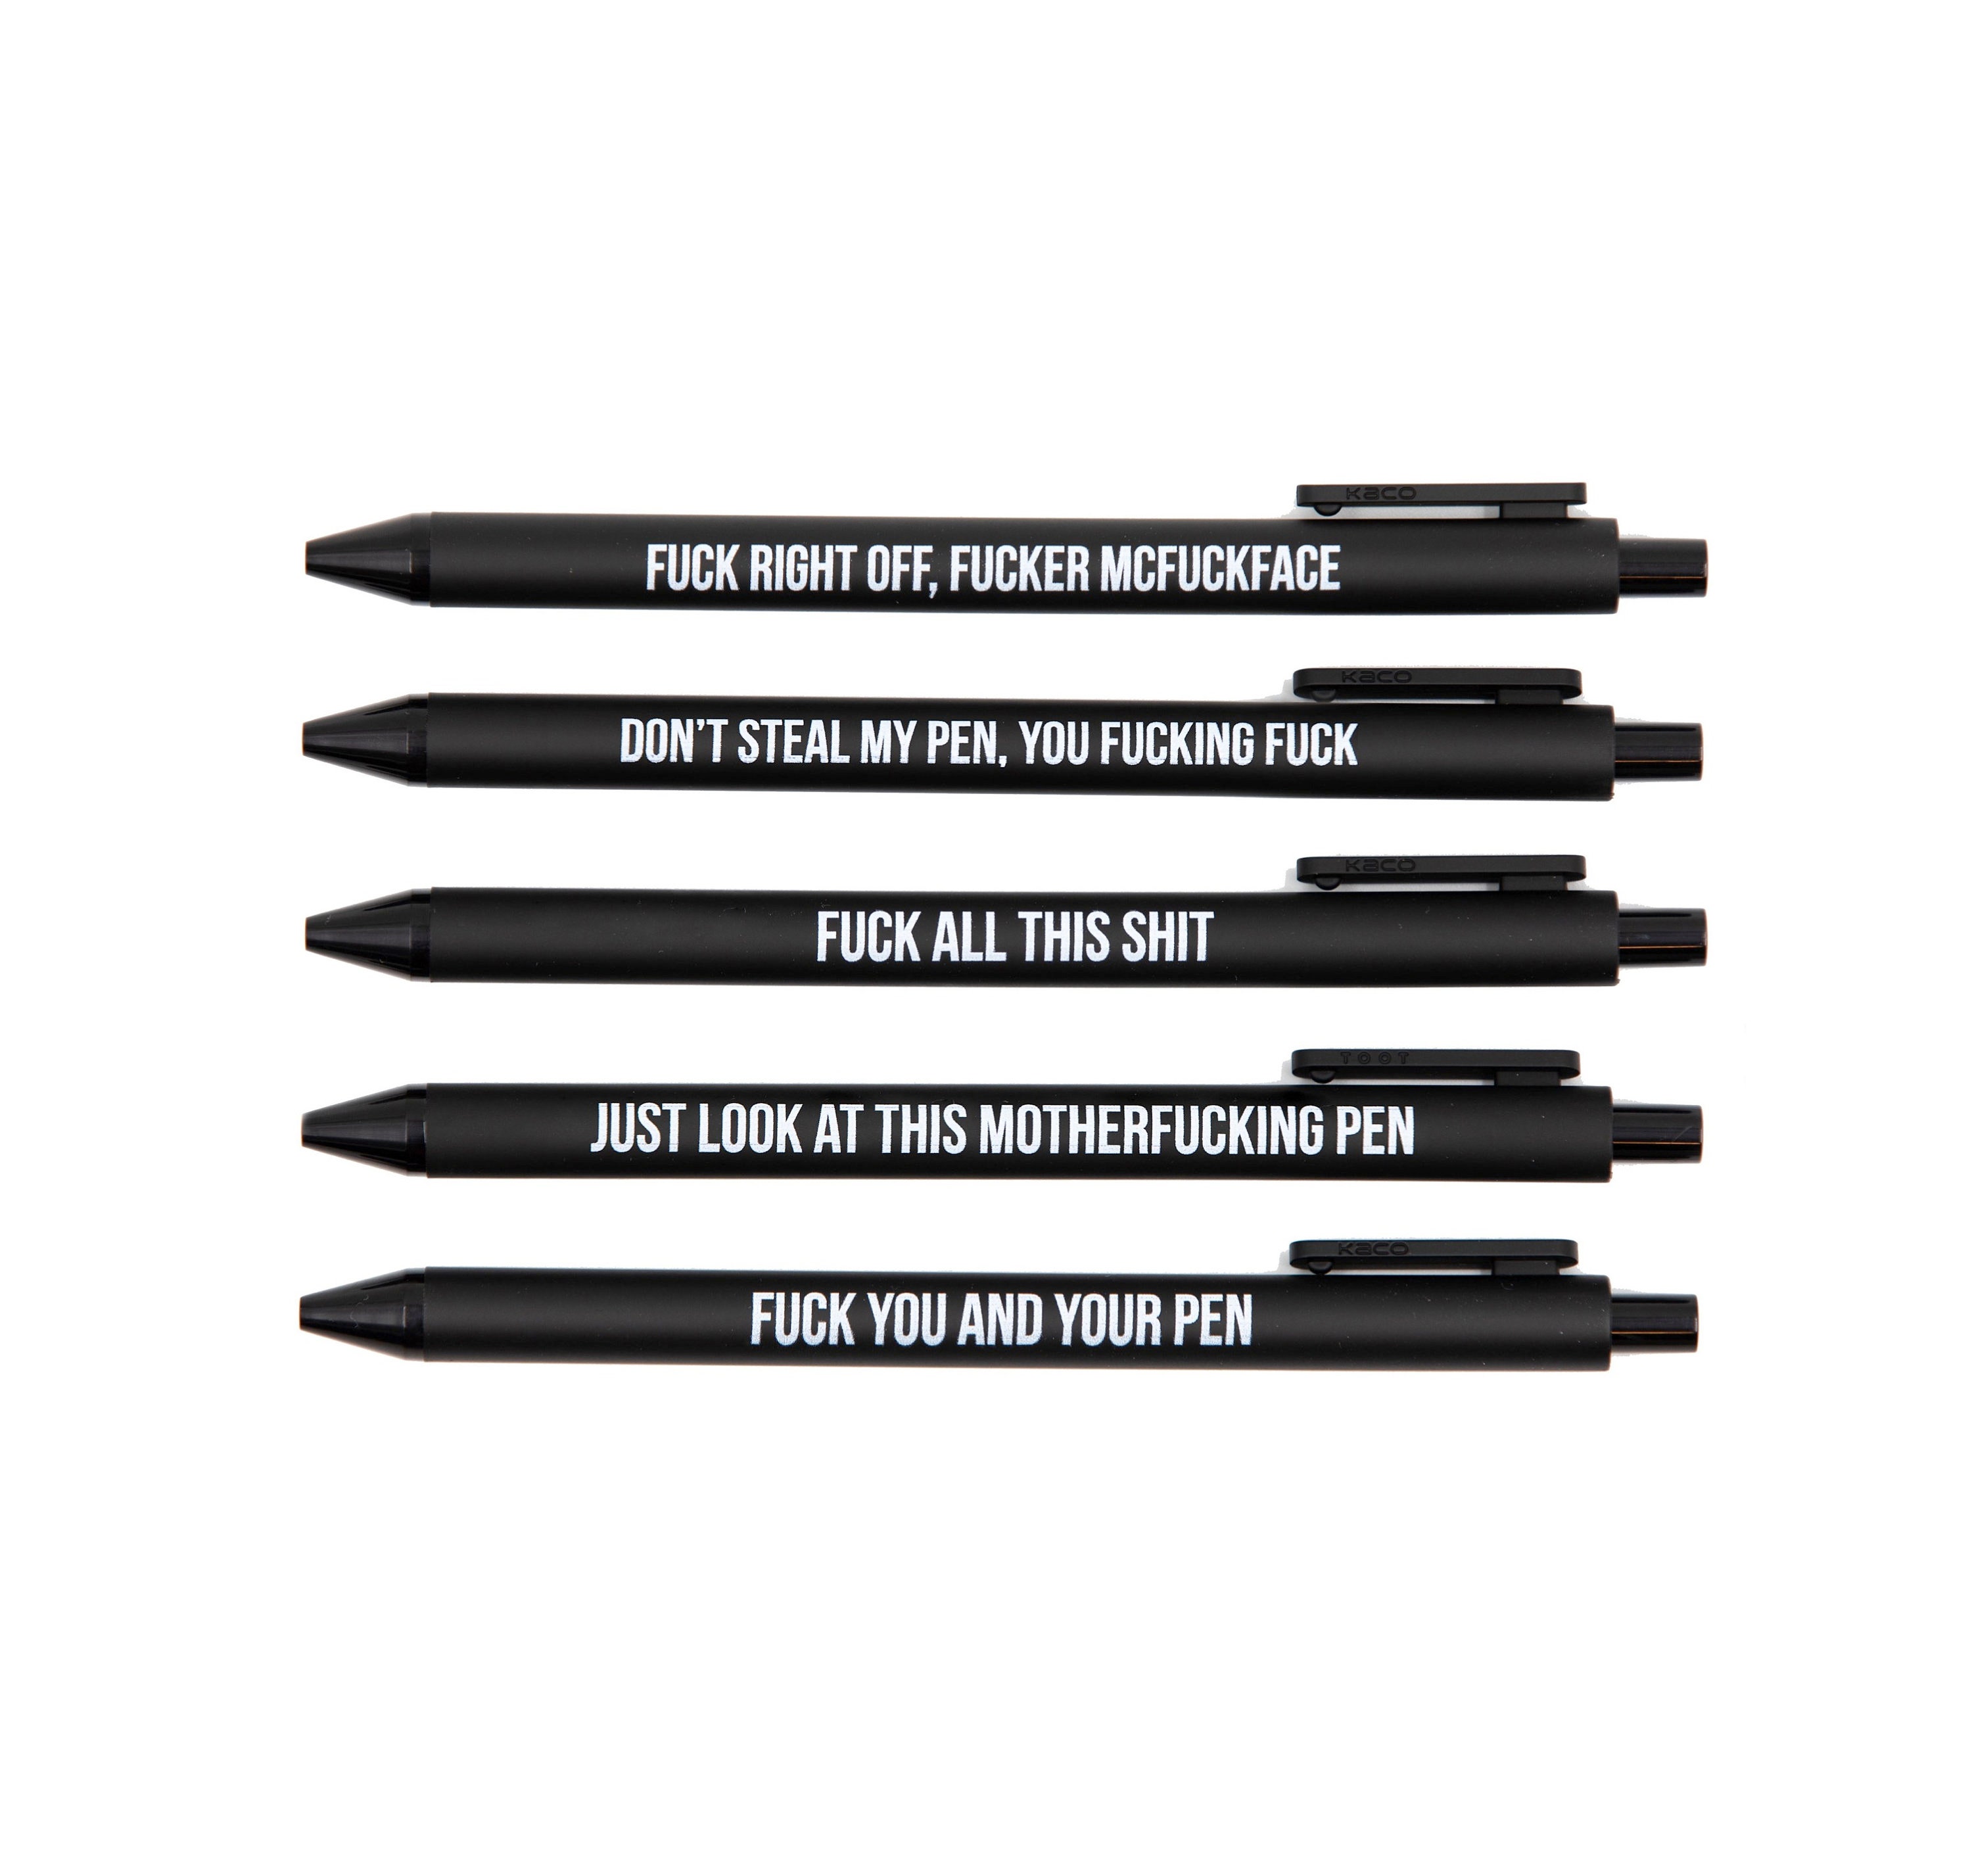 5PCS Offensive Pen MAMA Pen Creative Plastic Negative Pen Shit